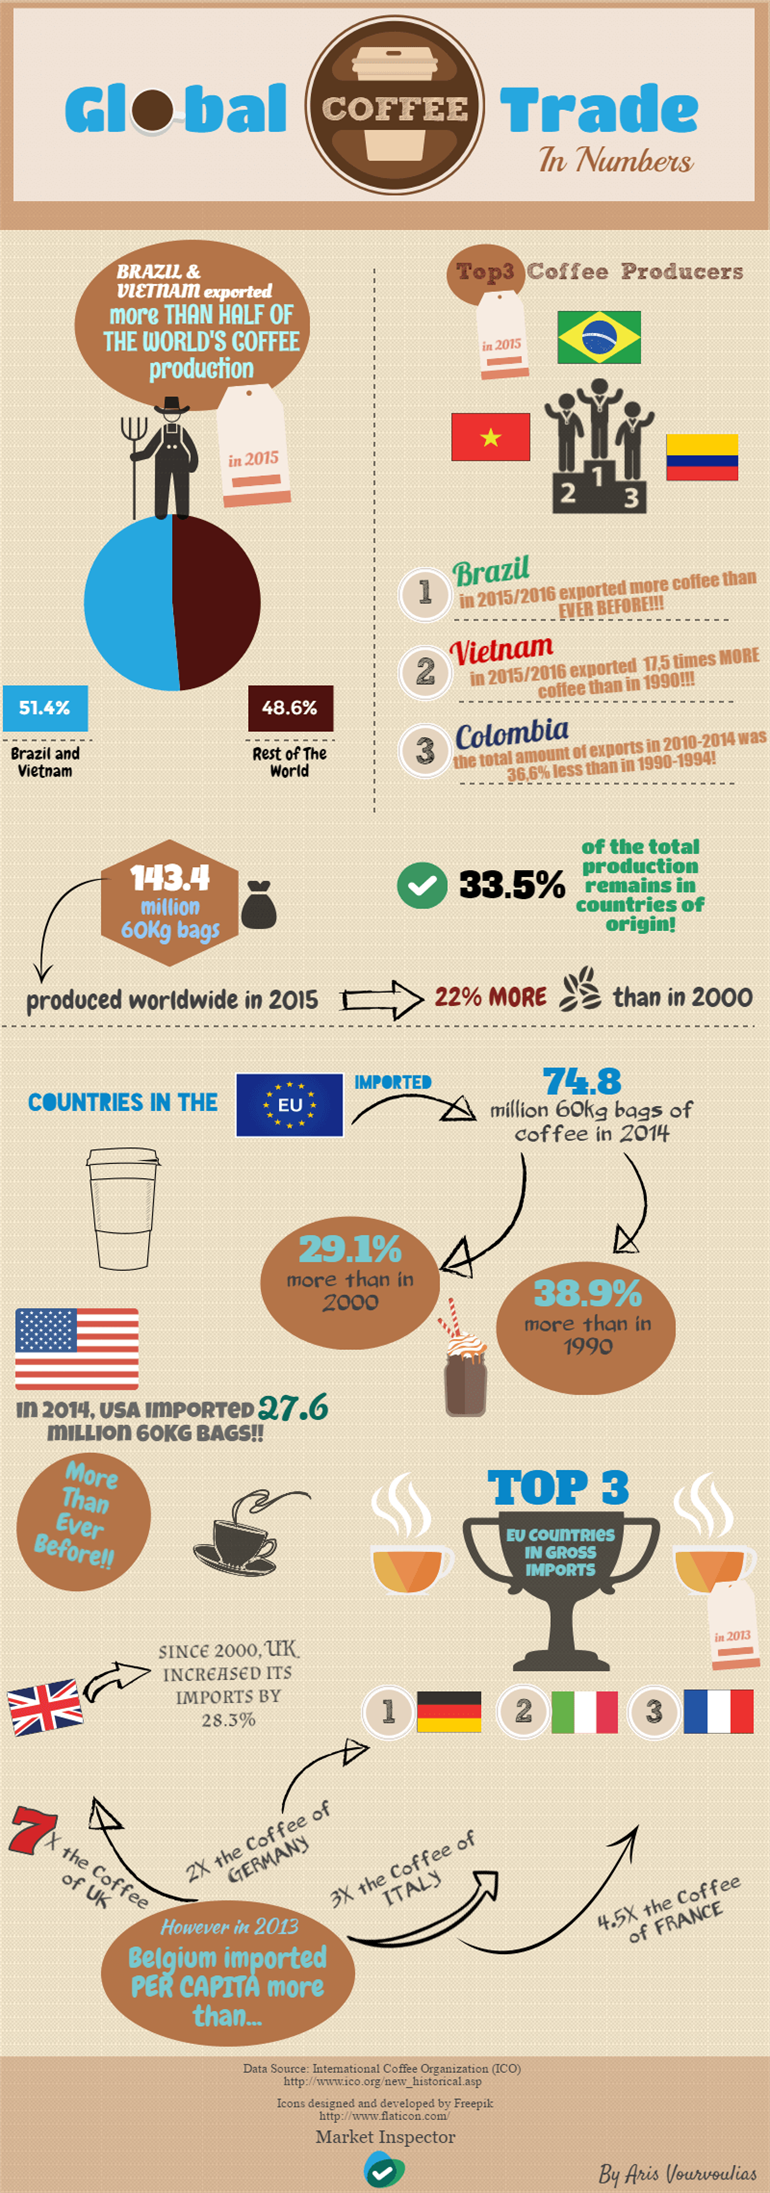 Infographic Global Coffee Trade_770x2193 (1)